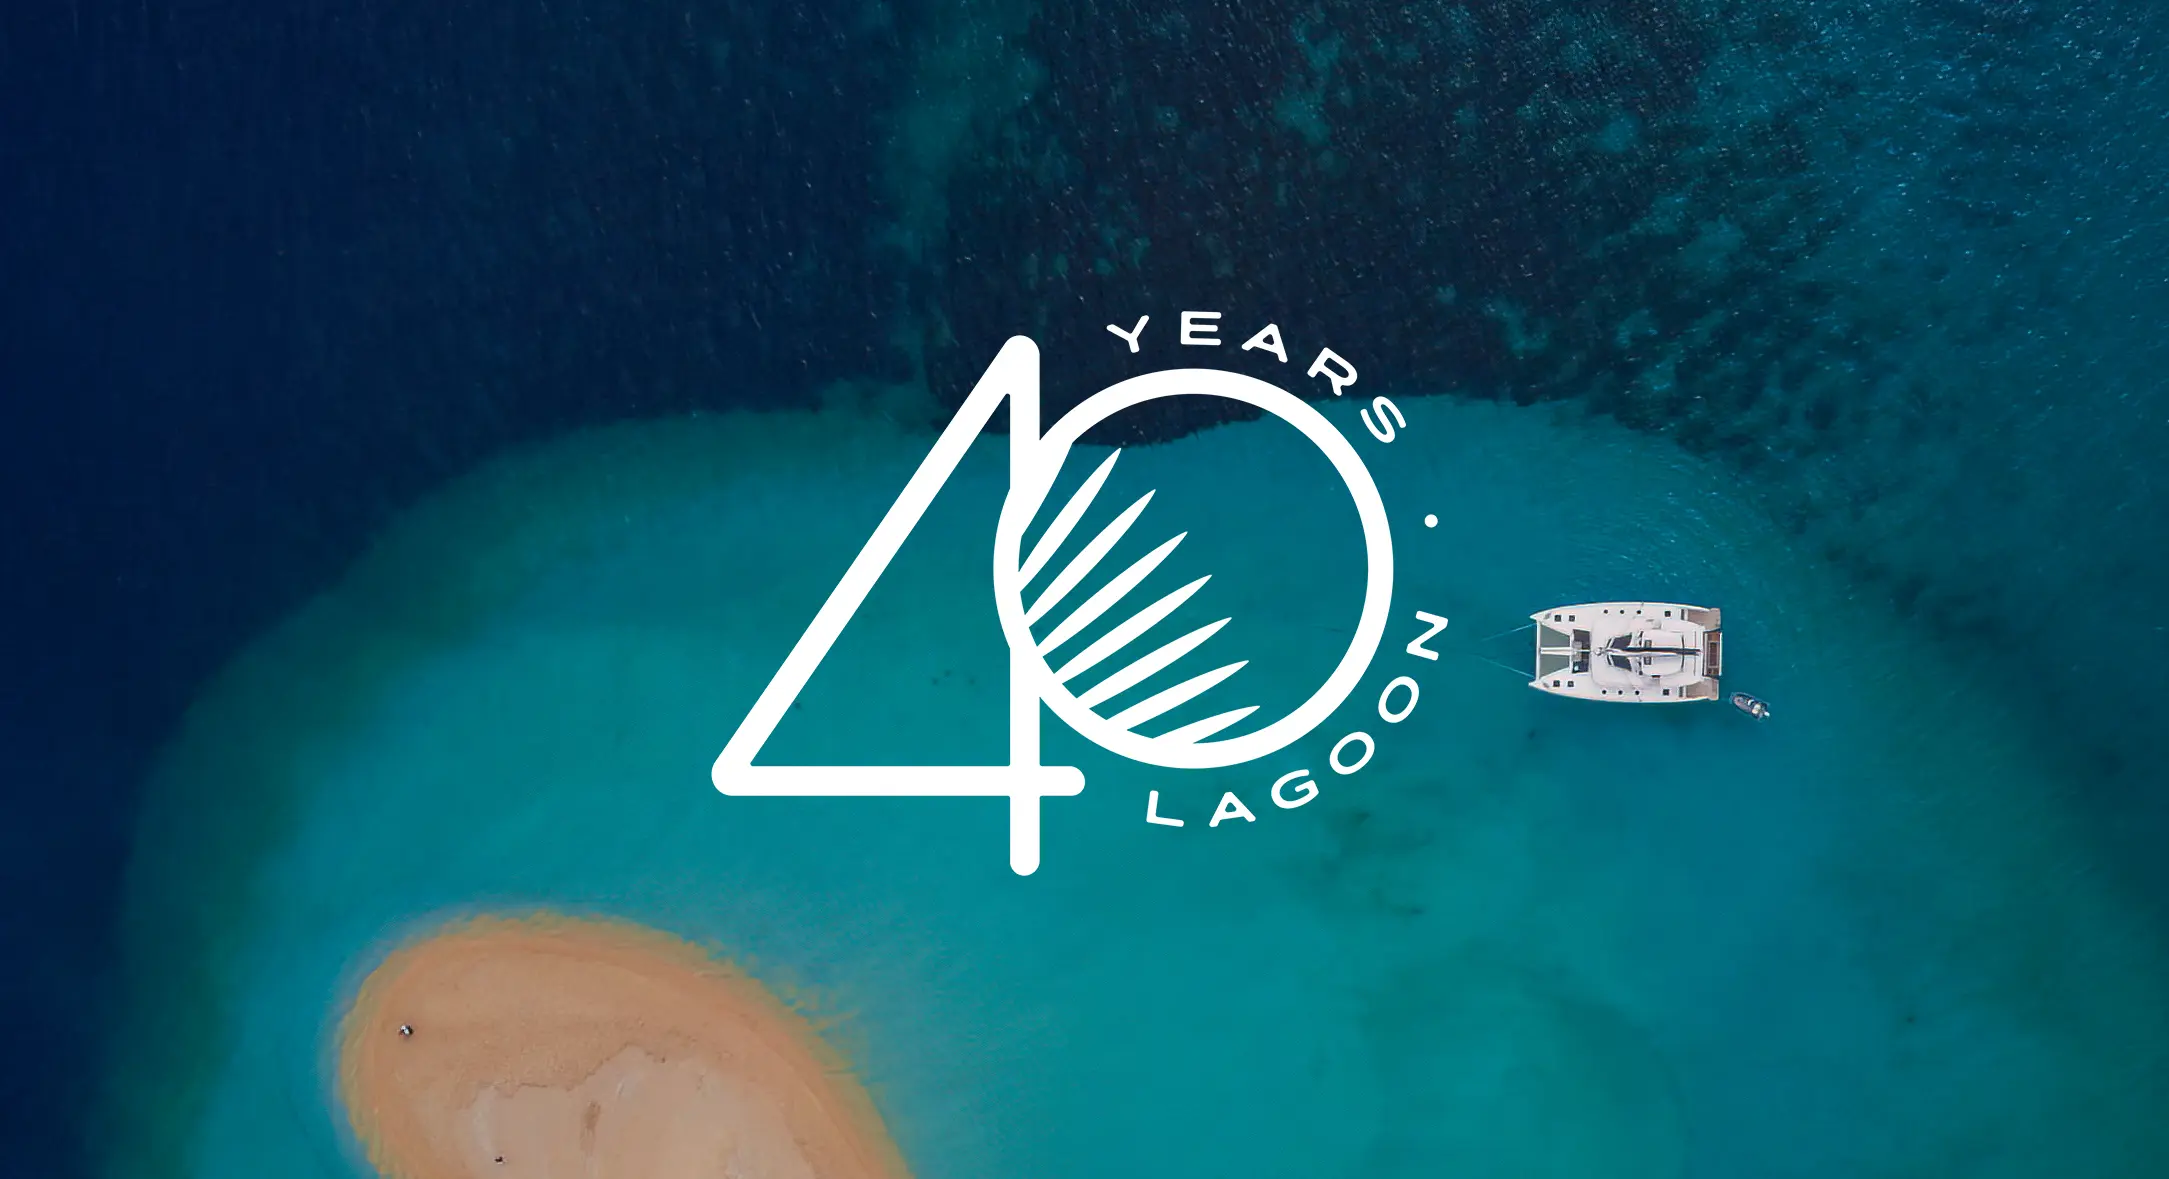 Lagoon_40_years